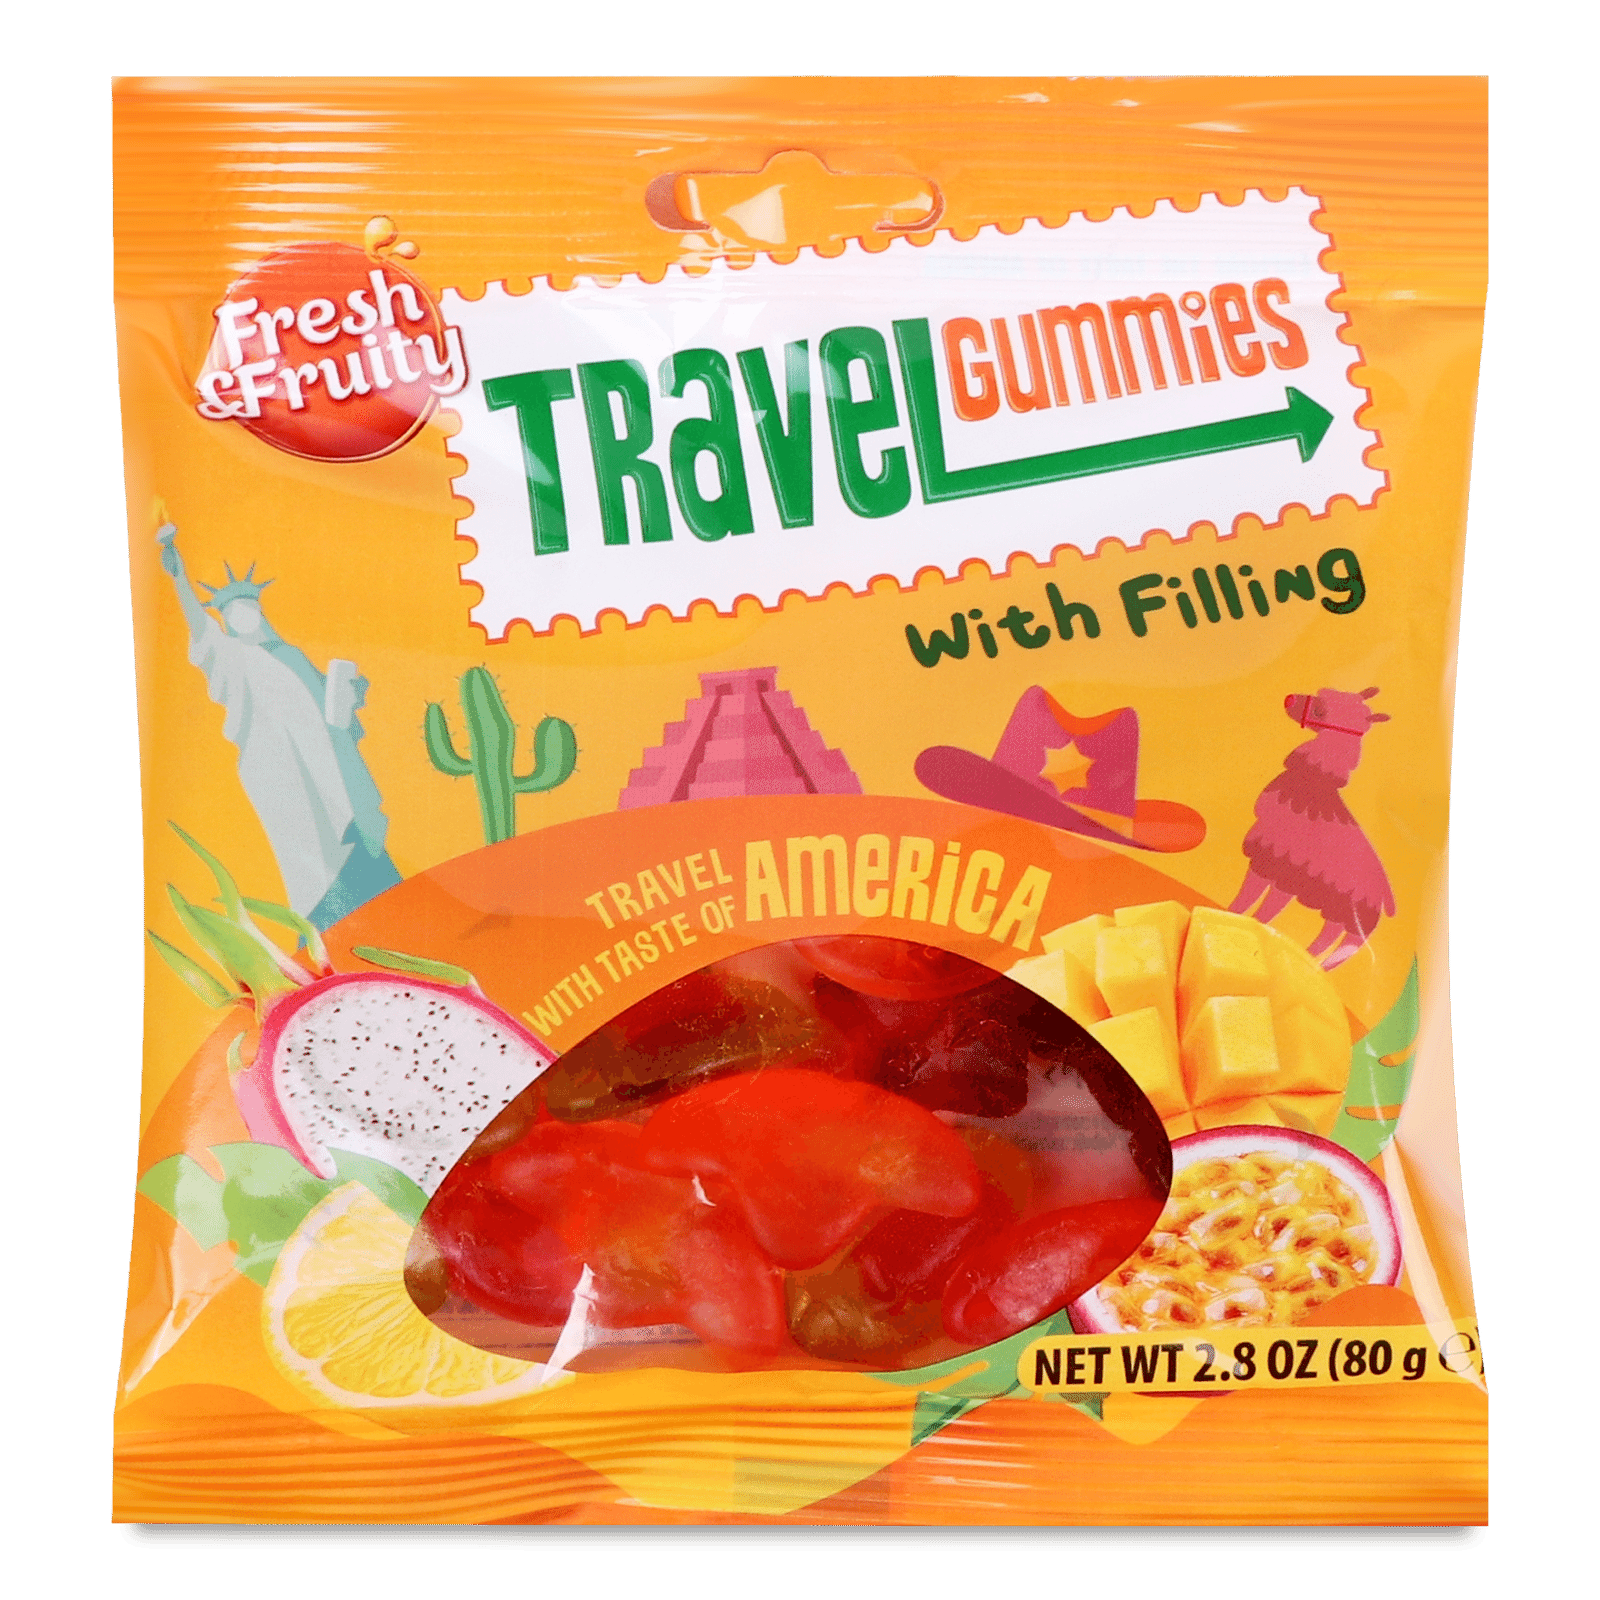 Цукерки Wawel Travel Gummies America з фруктовим смаком - 1